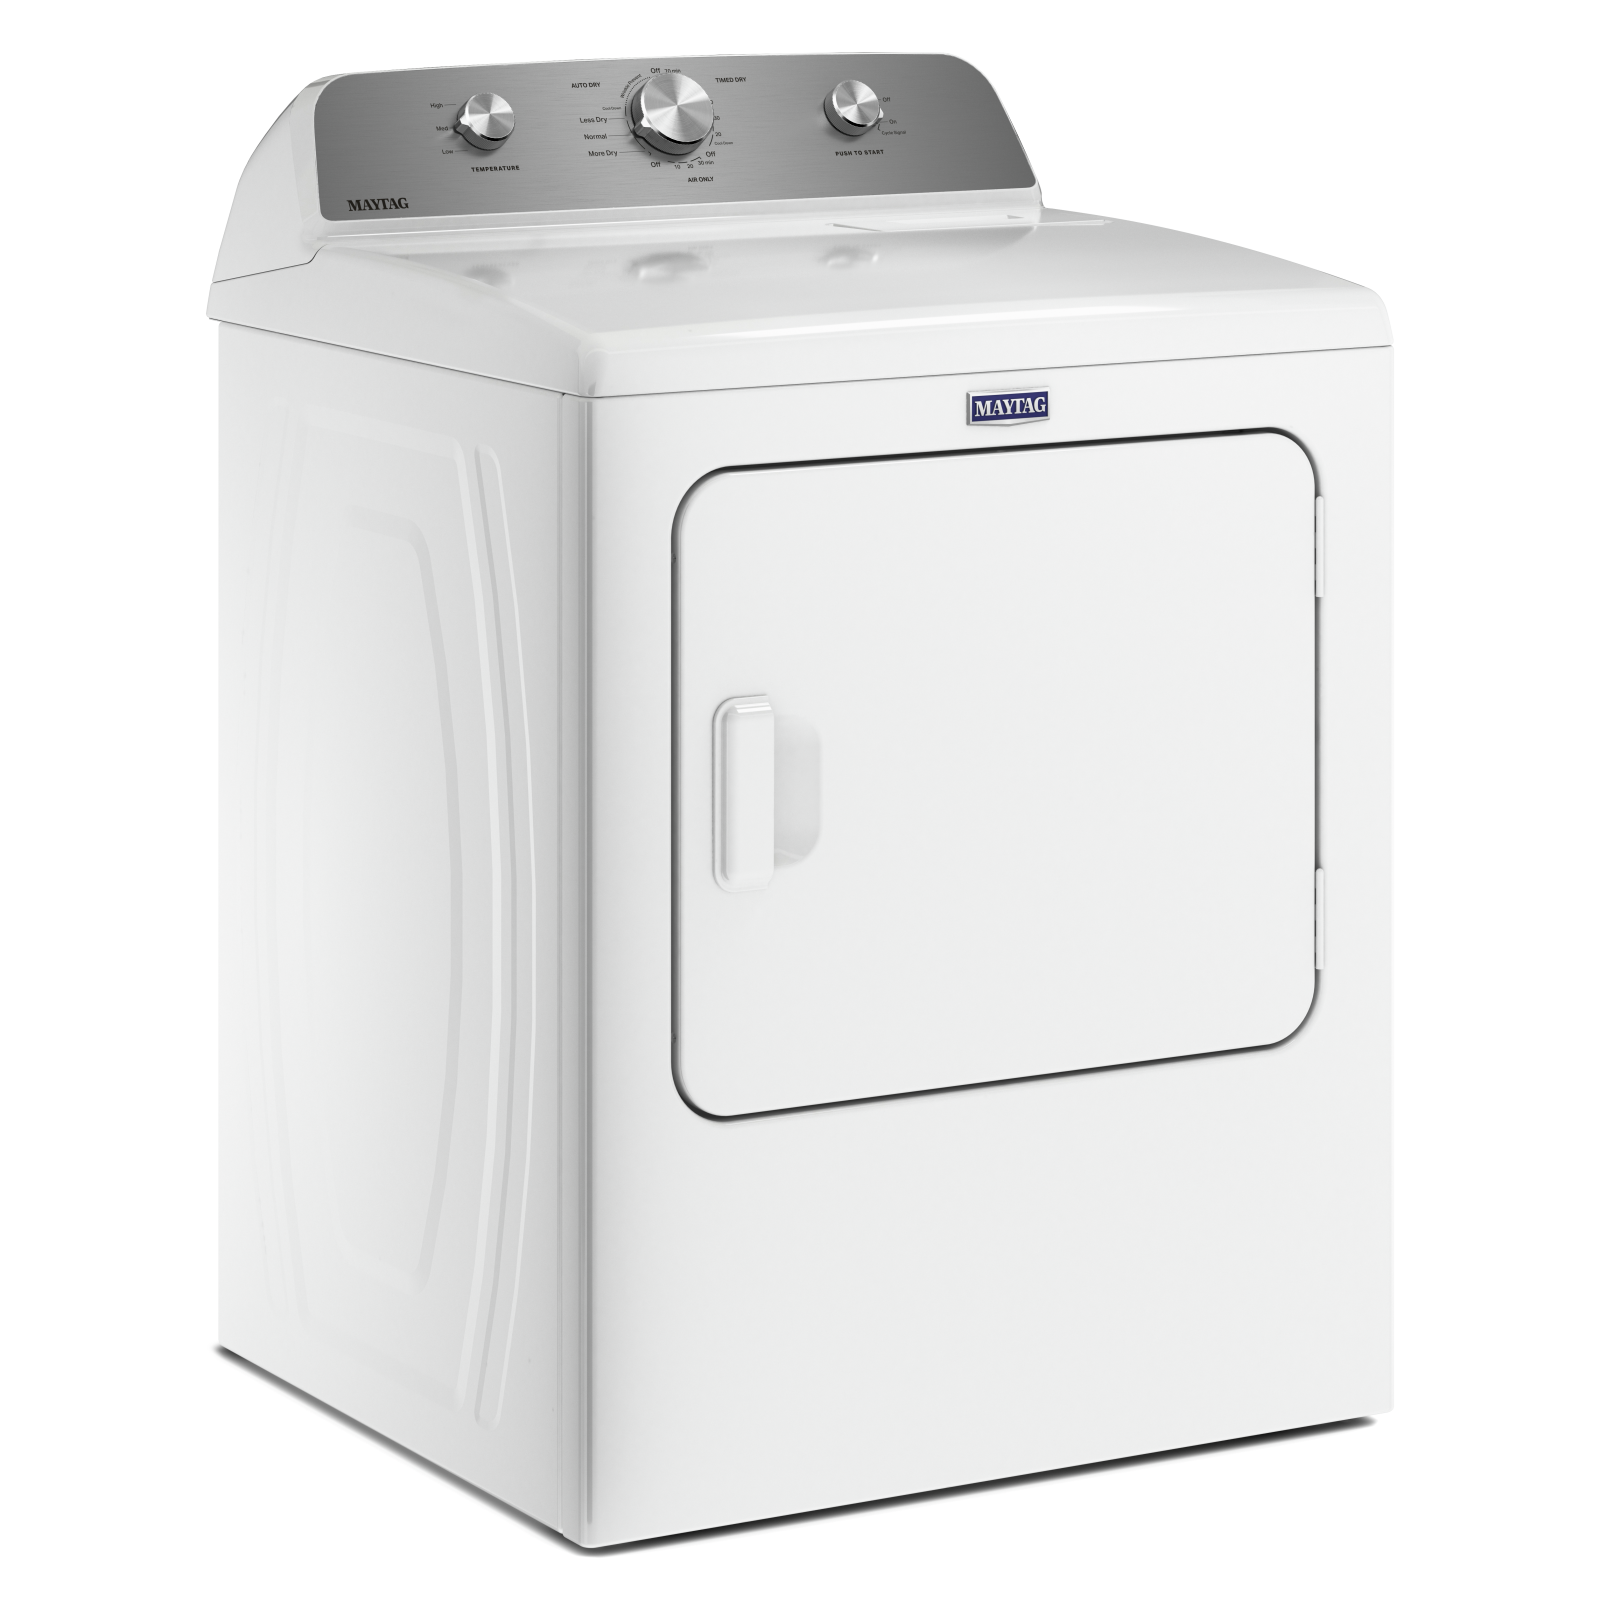 Maytag - 7 cu. Ft  Gas Dryer in White - MGD4500MW